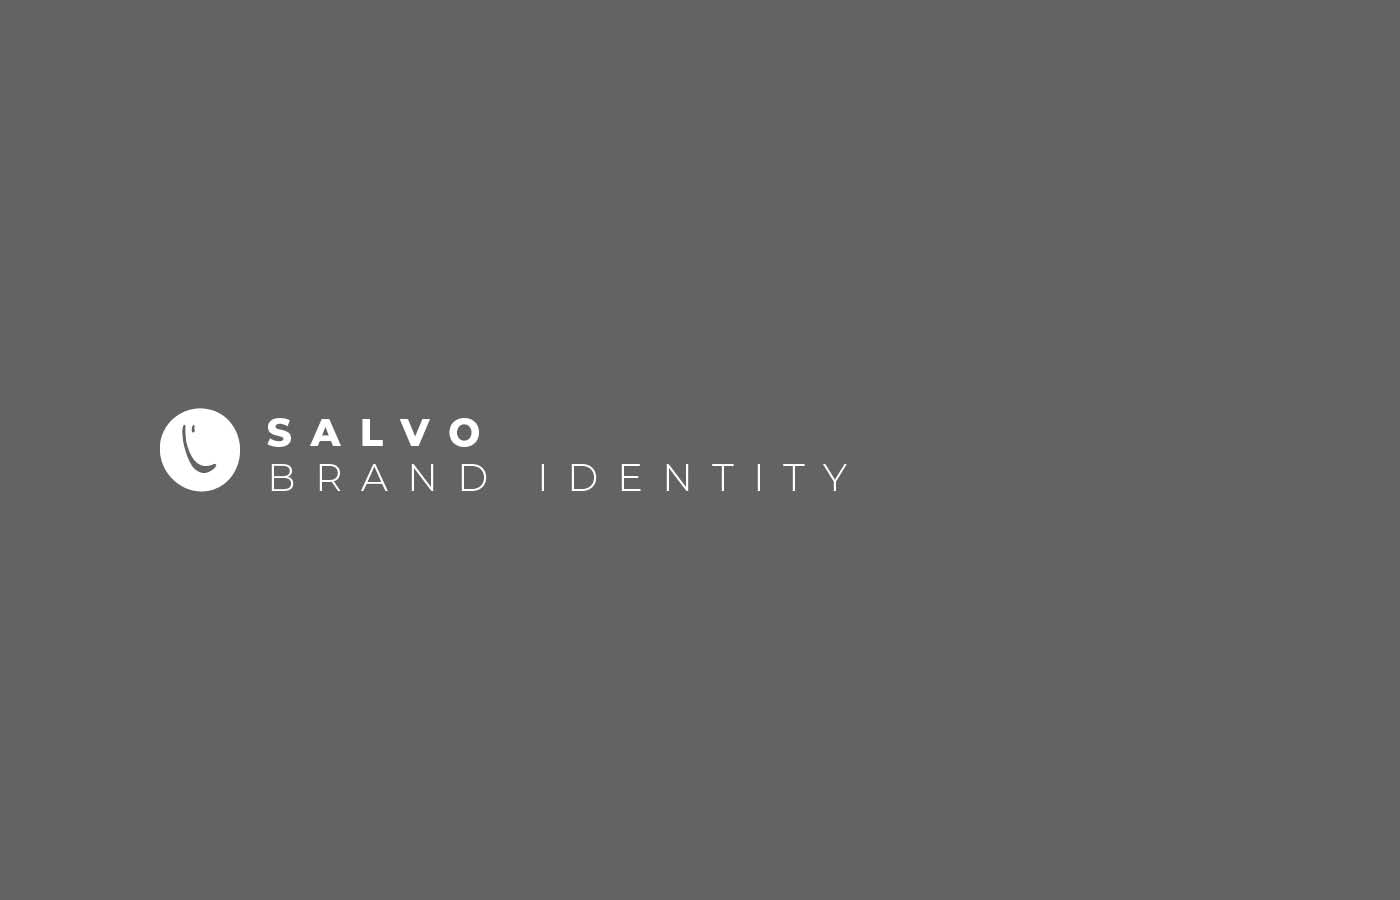 Salvo schef – branding image